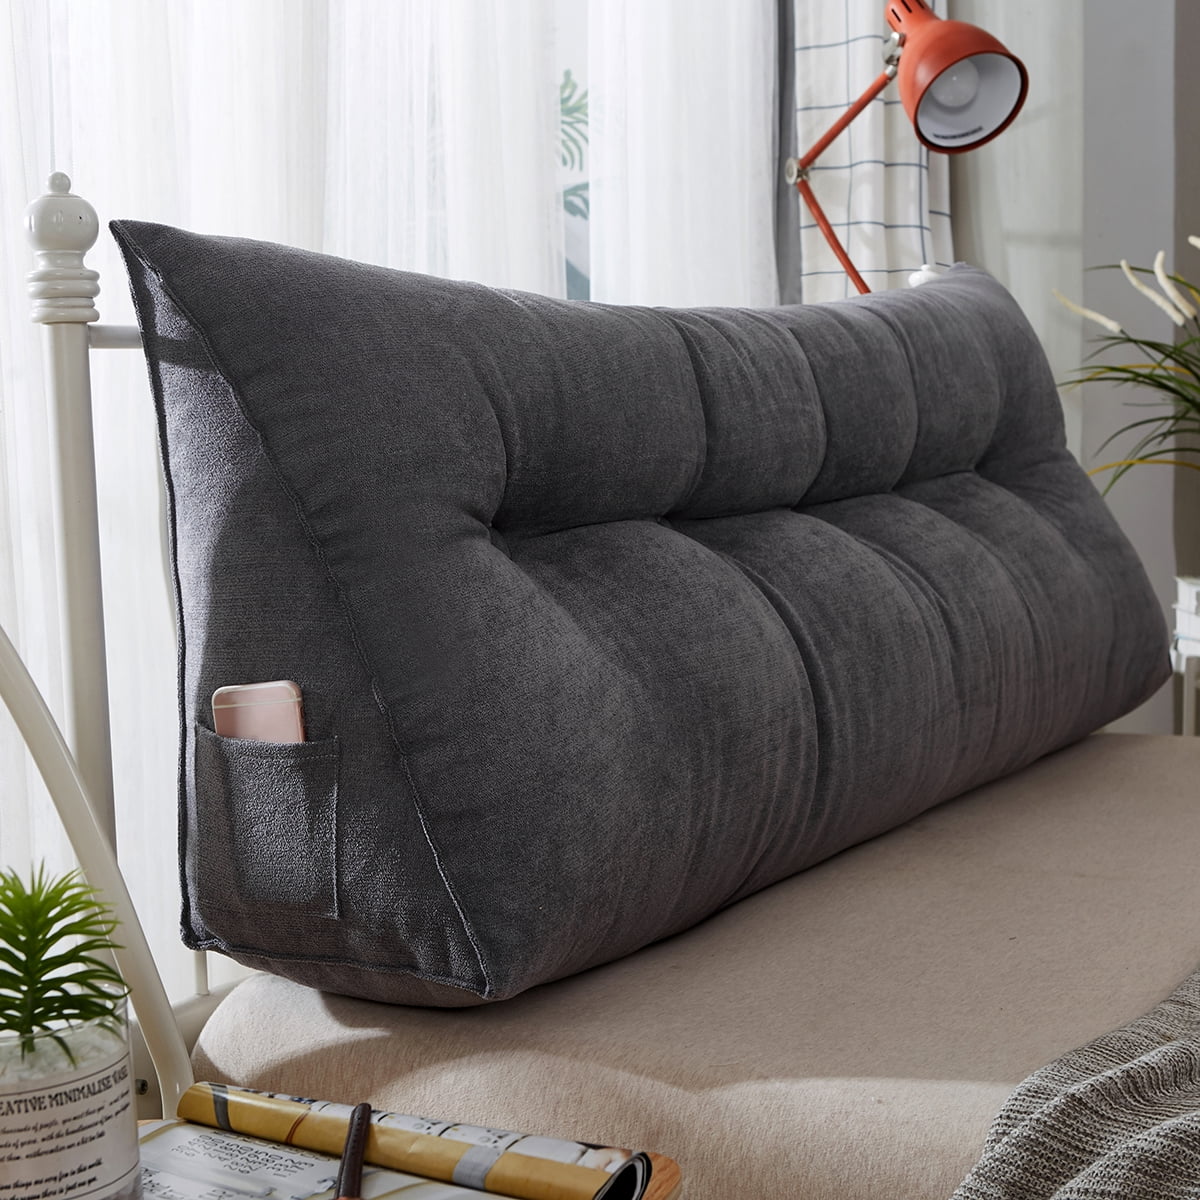 39'' Sofa Bed Large Bolster Triangular Wedge Backrest Pillow Lumbar Cushion Soft 